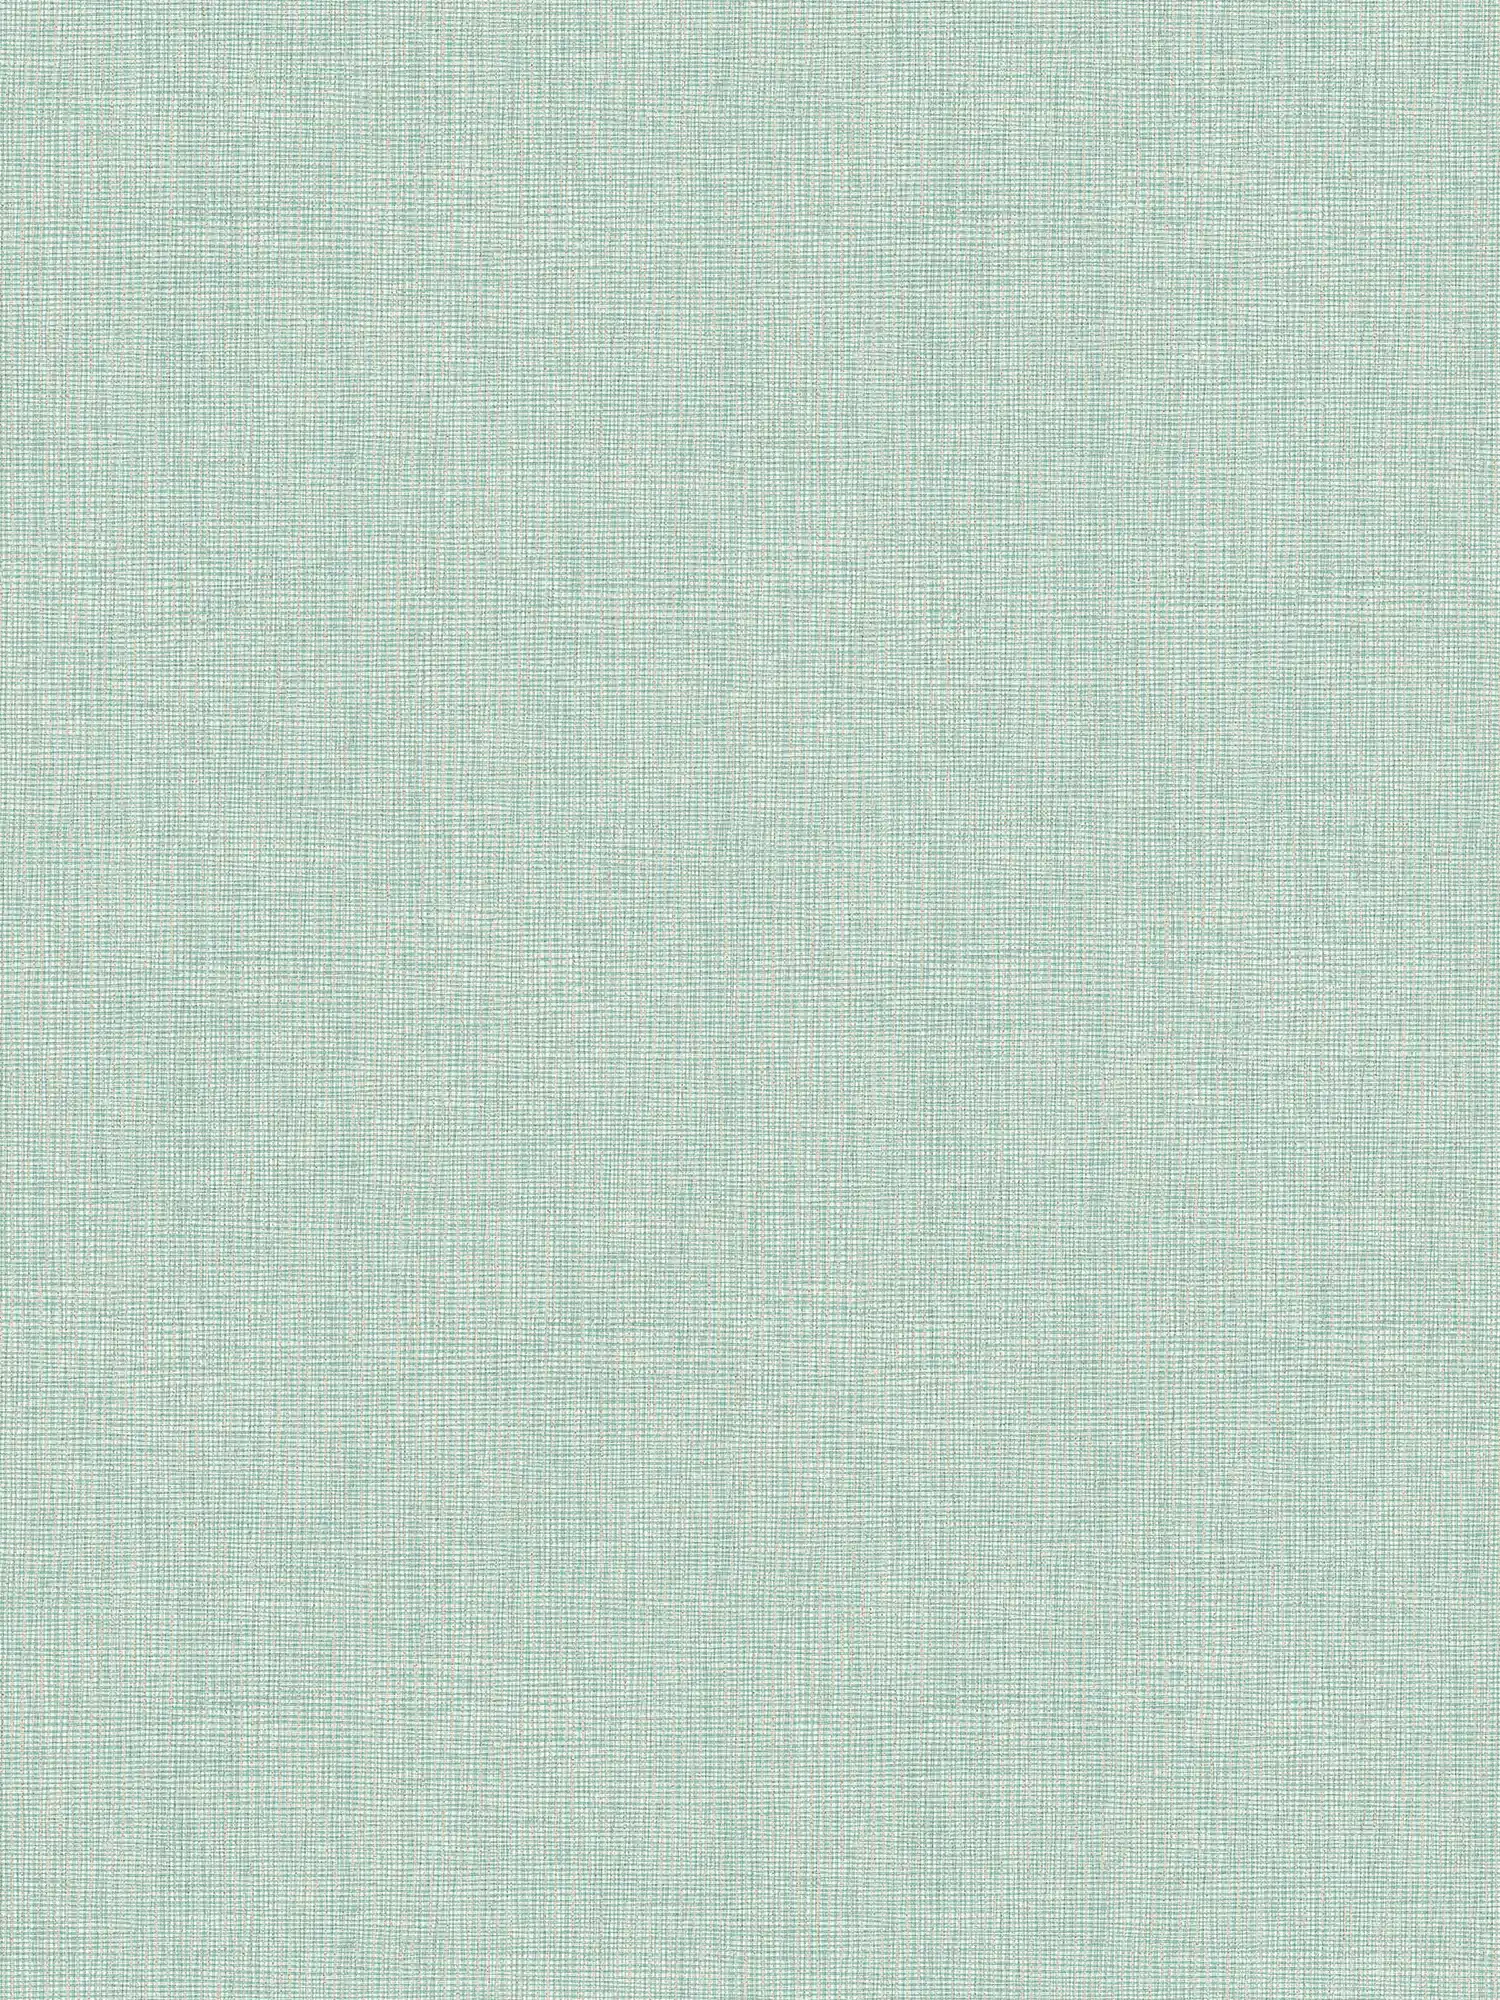         Hellgrüne Tapete Textil Optik mit goldenen Details – Blau, Grau, Silber
    